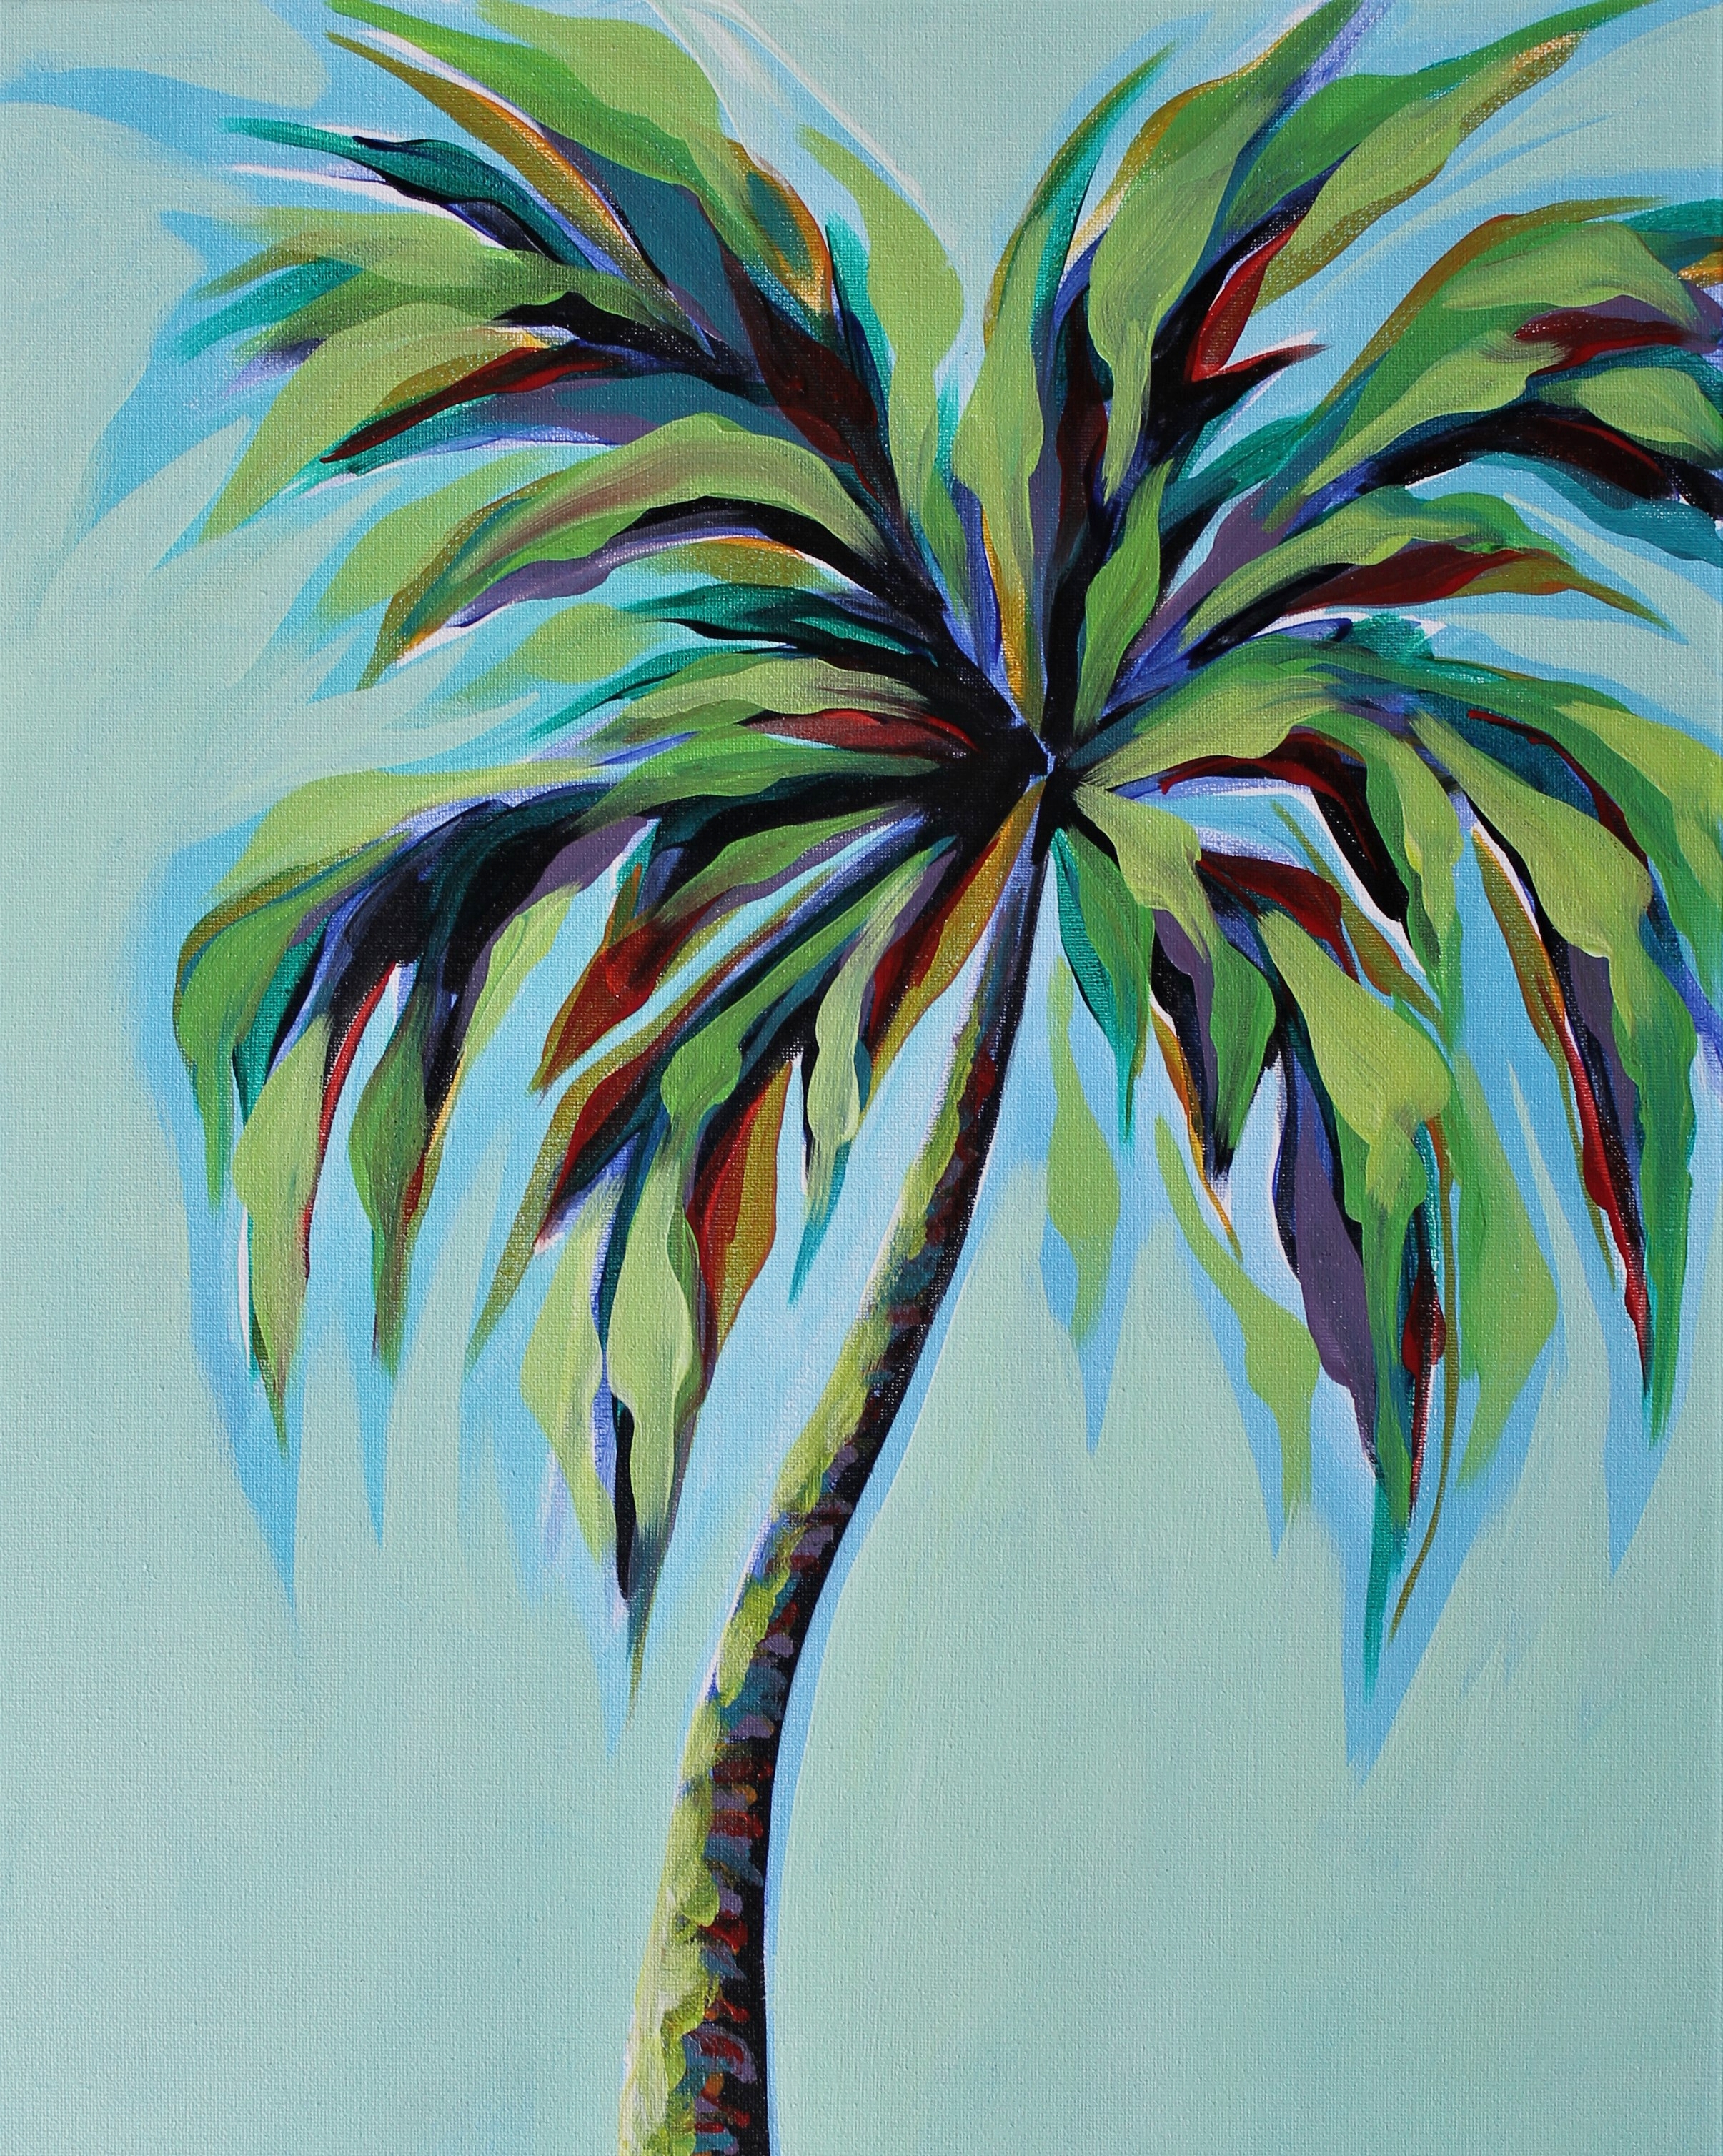 Lone Palm Tree